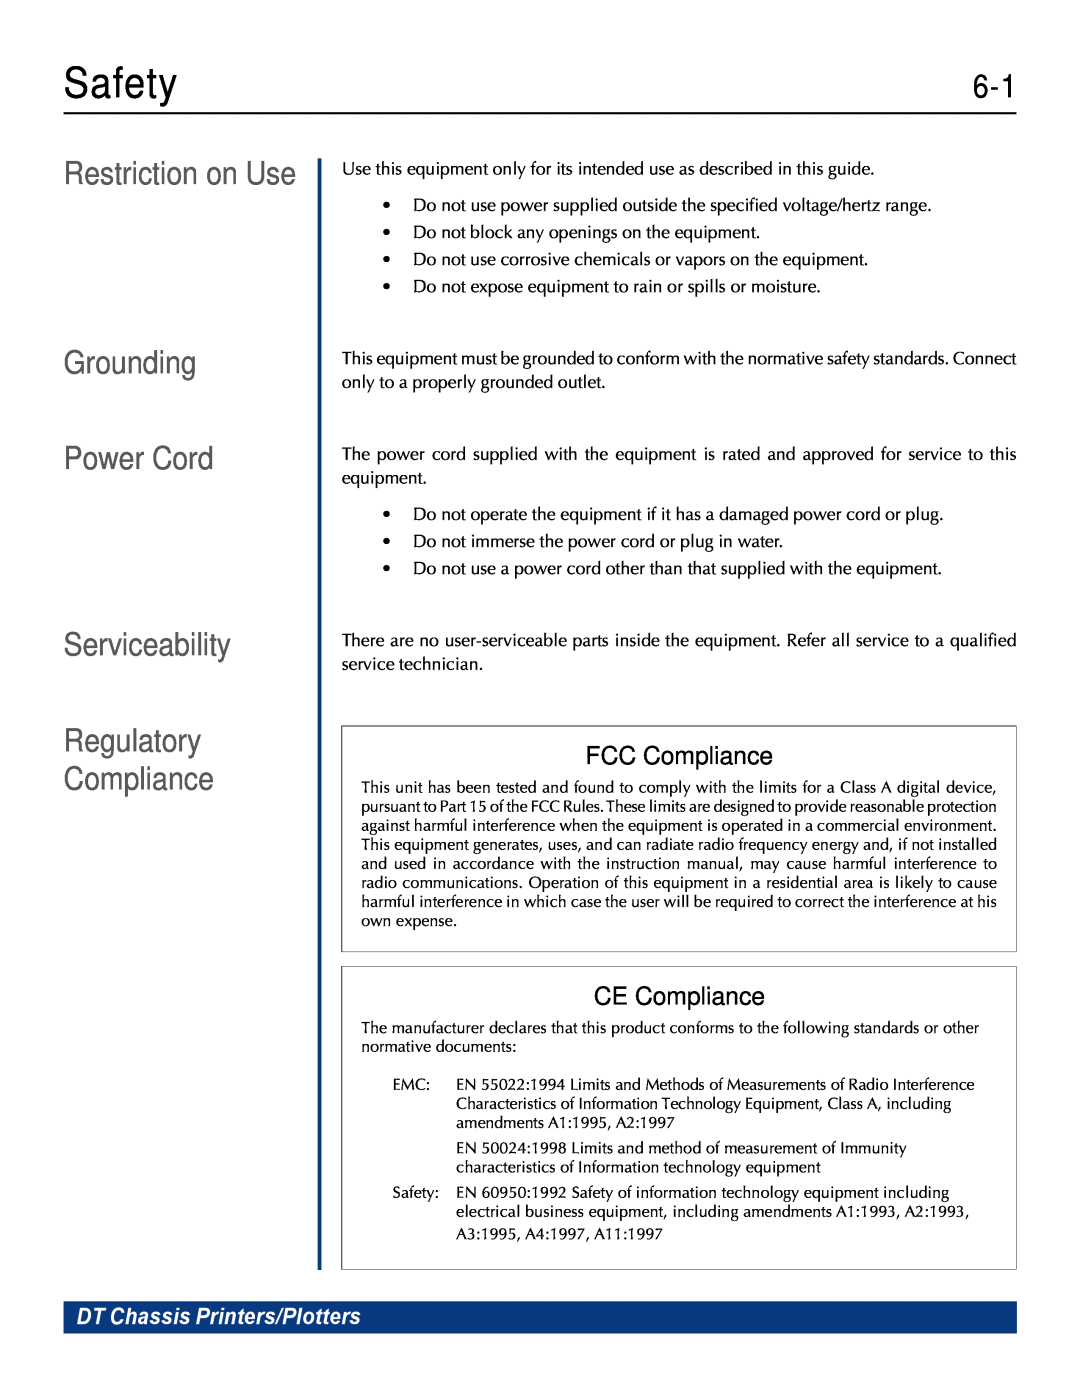 Printek 820DL/G, 810, 820G Safety, Restriction on Use Grounding Power Cord Serviceability Regulatory, FCC Compliance 